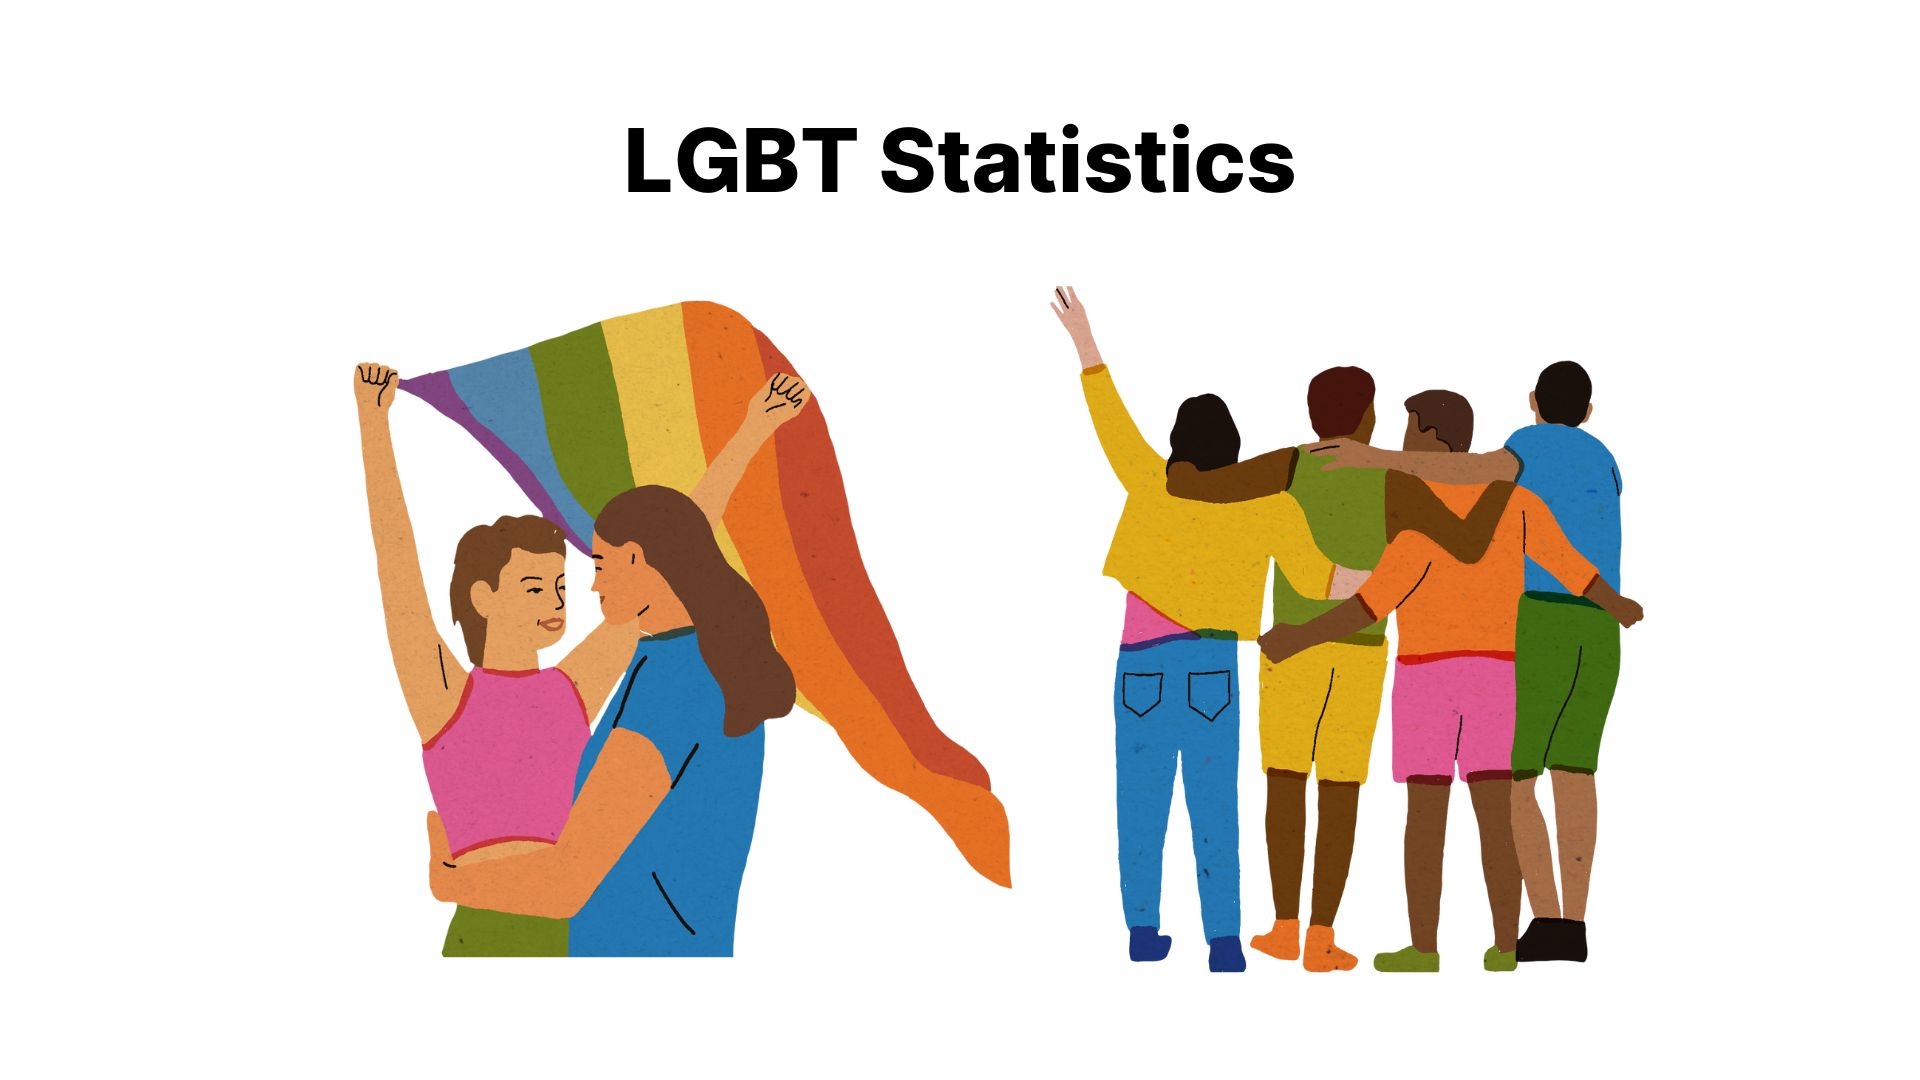 LGBT Statistics - By County, Demographics and Anti-LGBTQ Threats